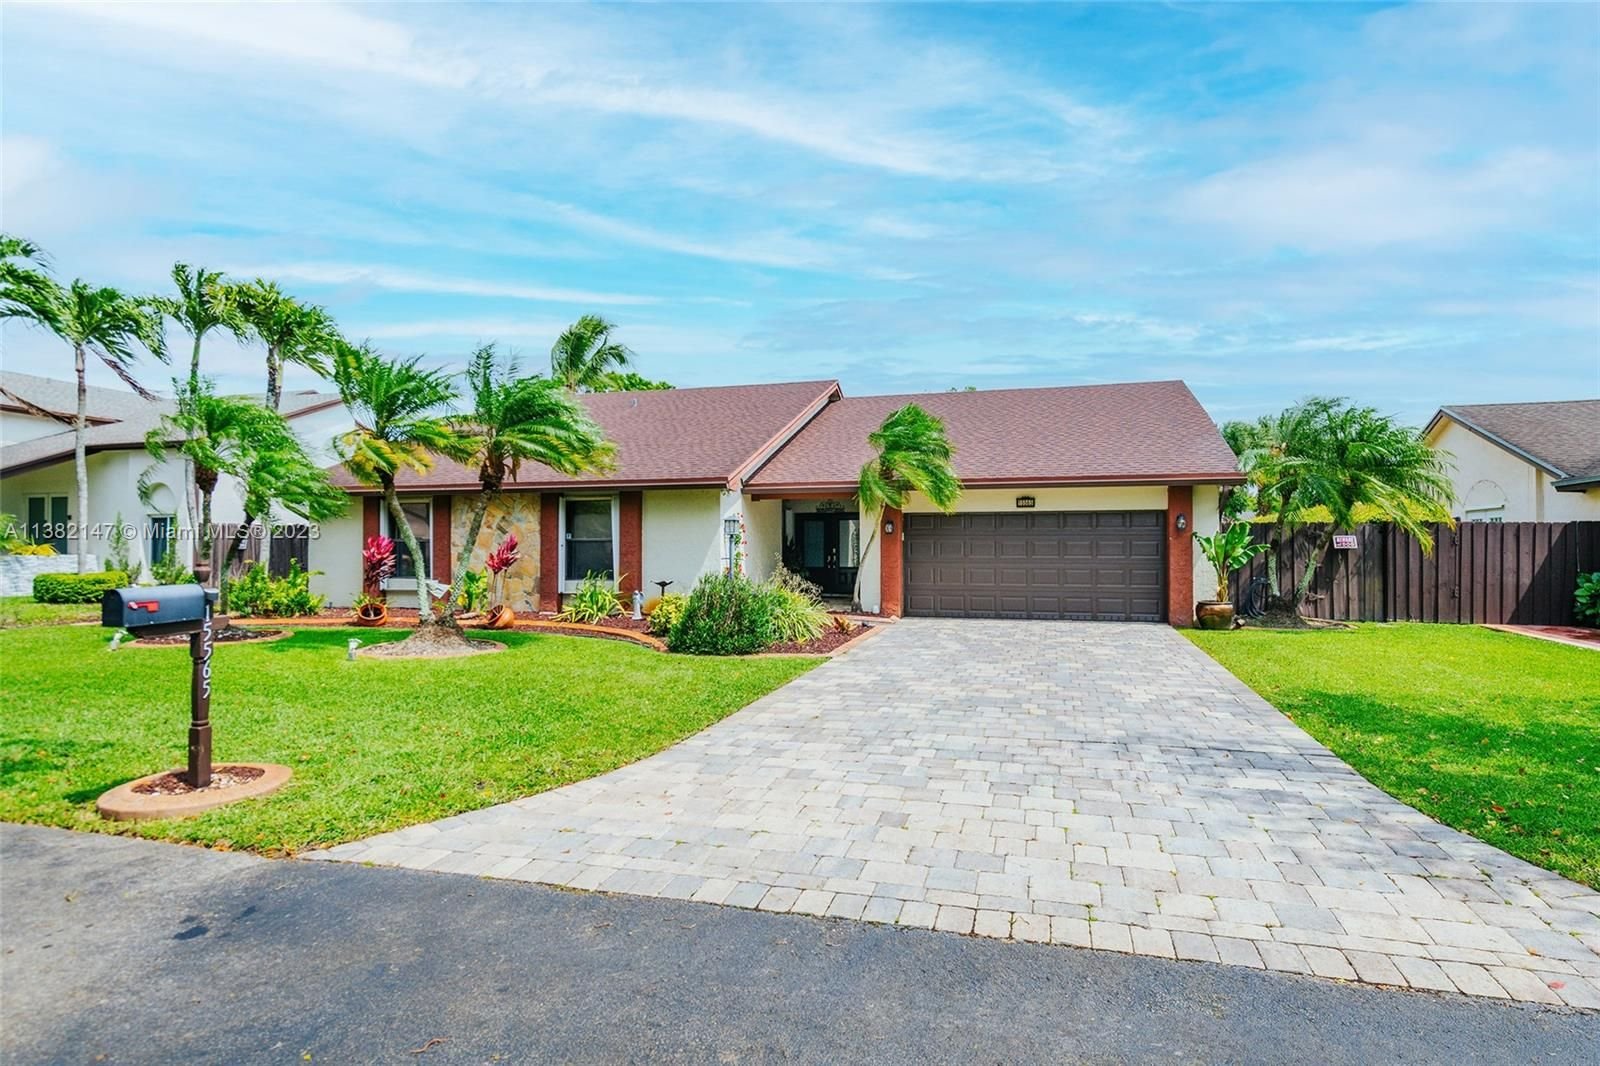 Real estate property located at 15565 47th Ter, Miami-Dade County, Miami, FL